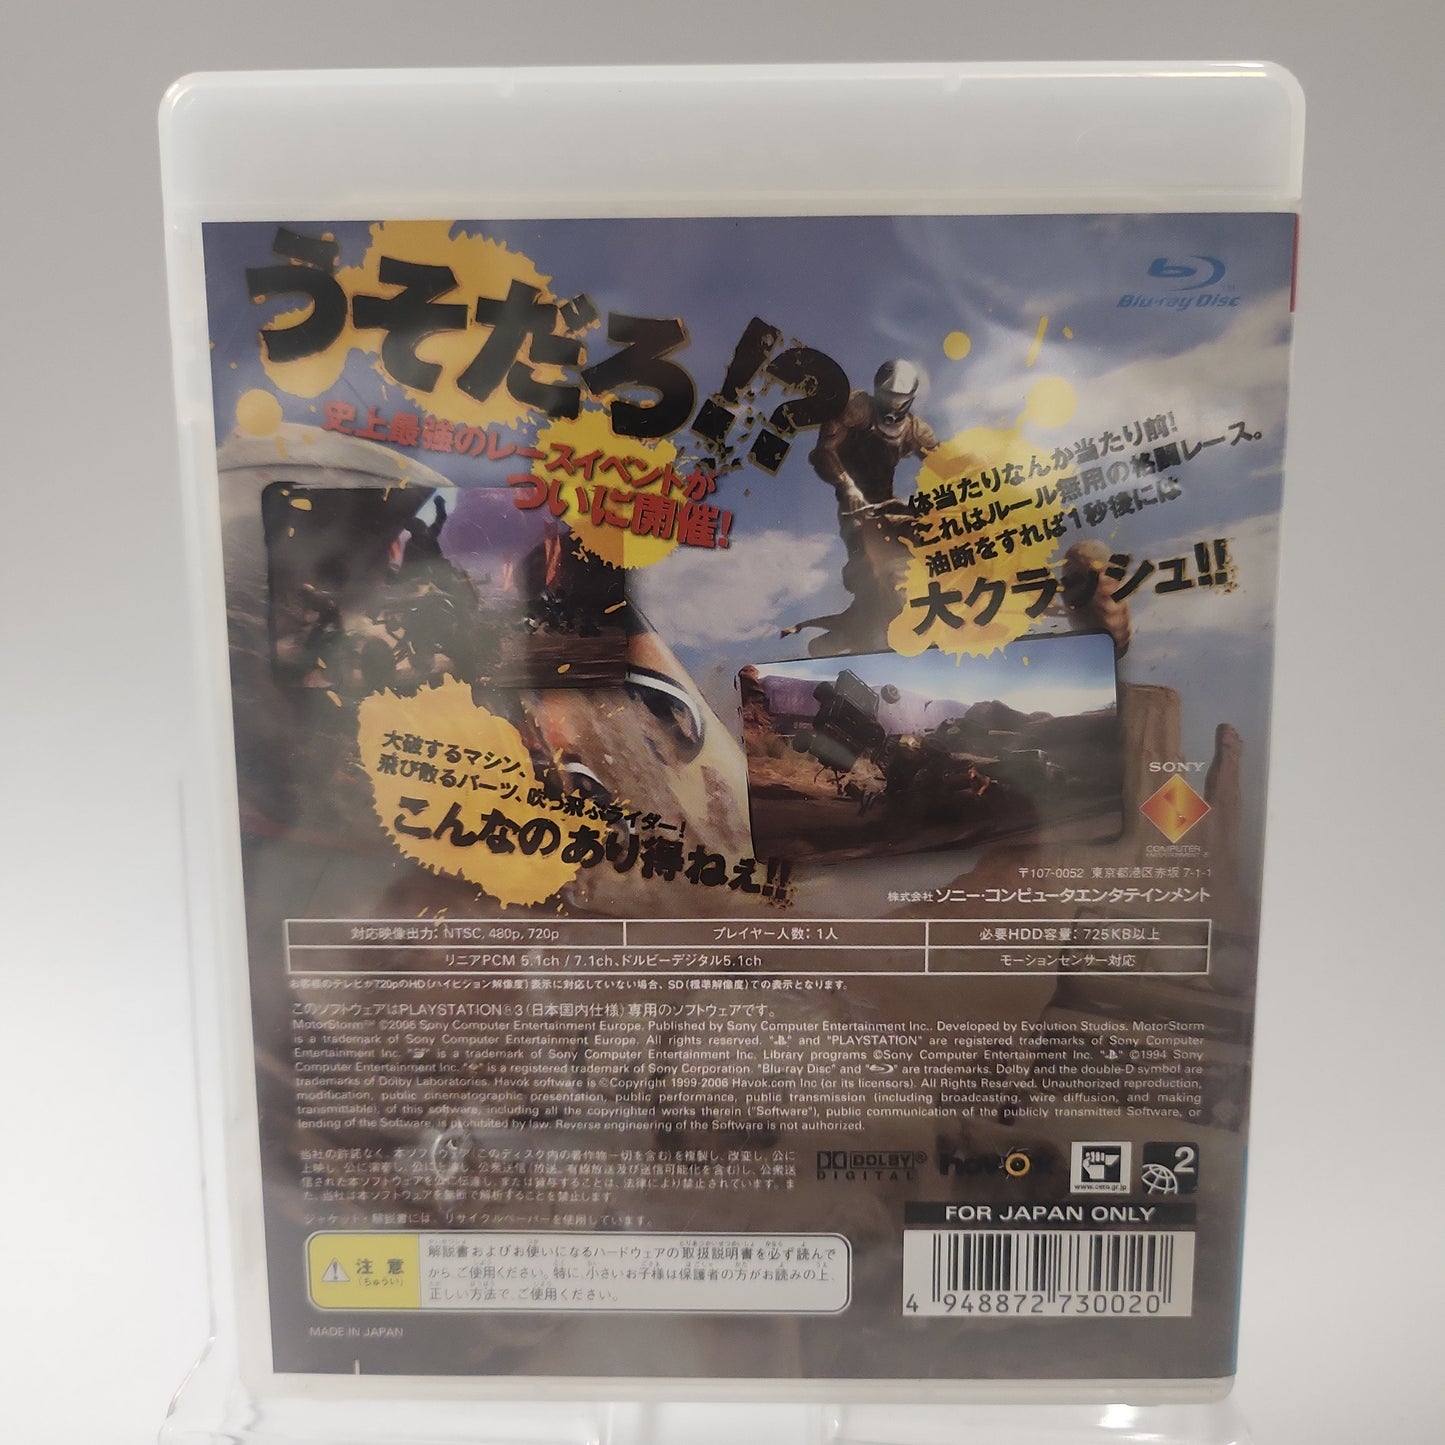 Motorstorm Japanisches Cover Playstation 3